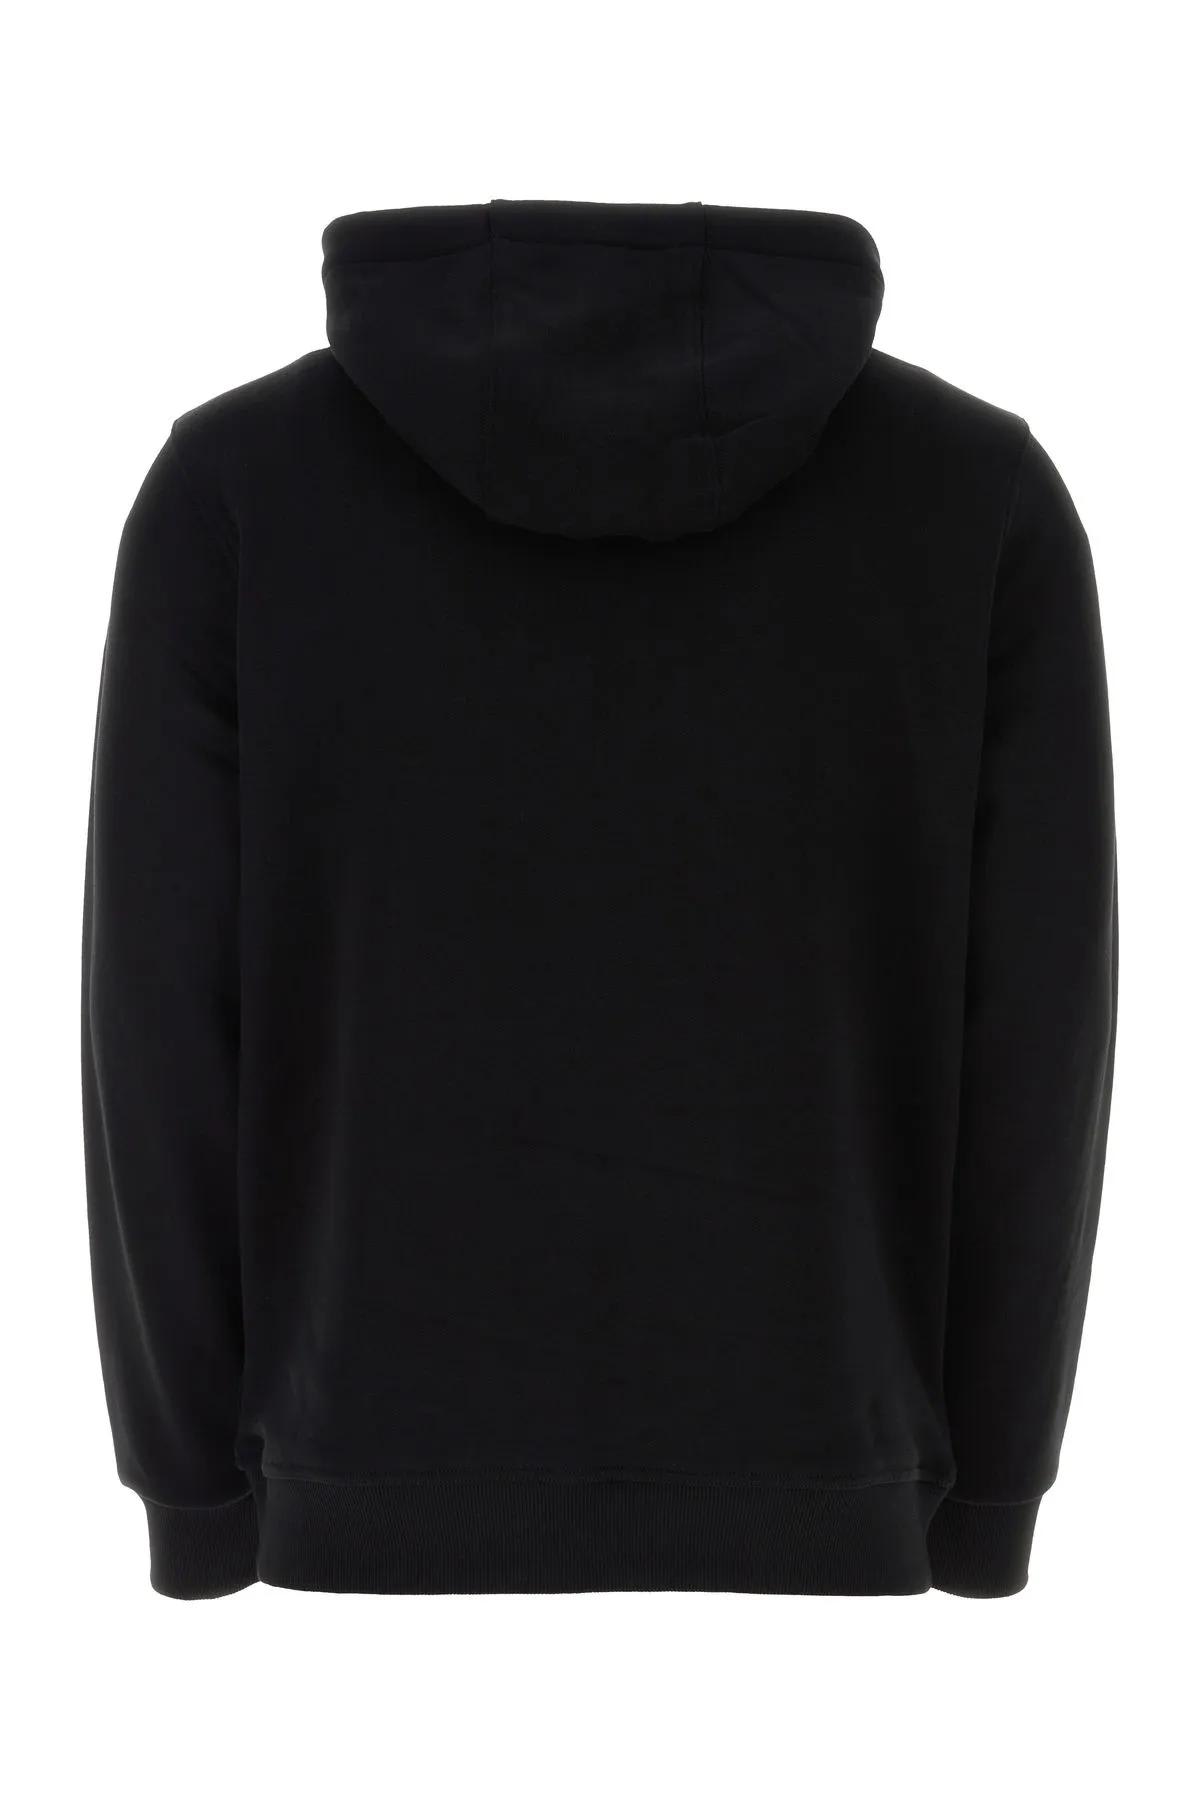 Shop Burberry Black Cotton Sweatshirt